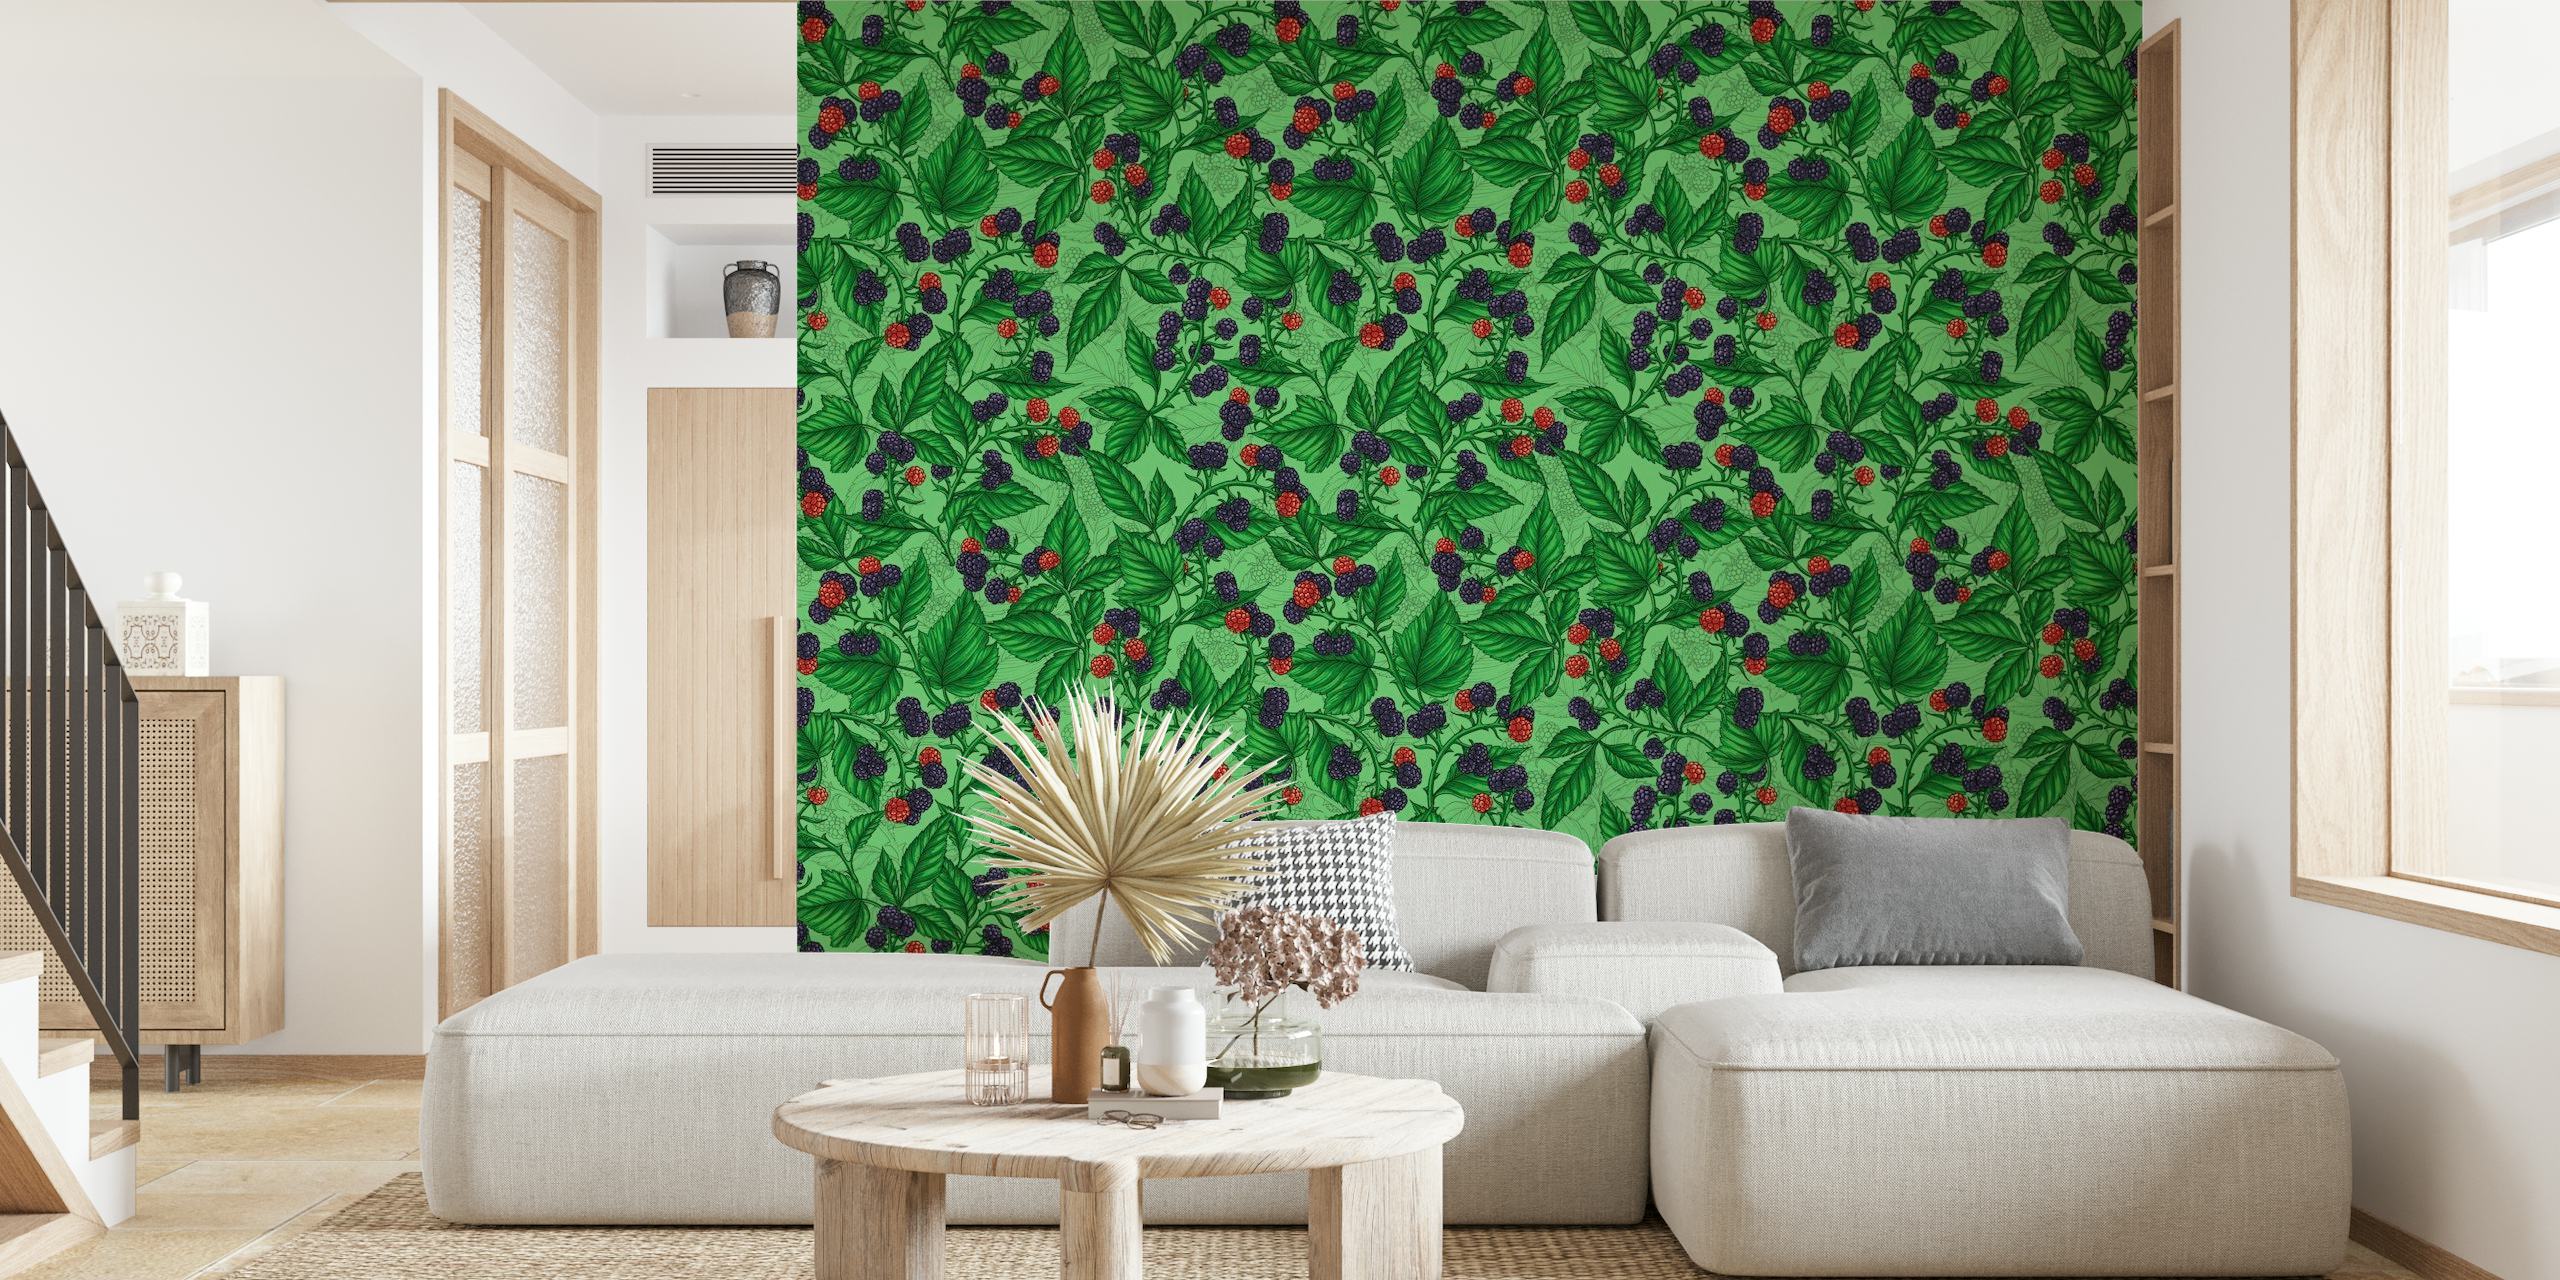 Green leaves with ripe blackberries wall mural